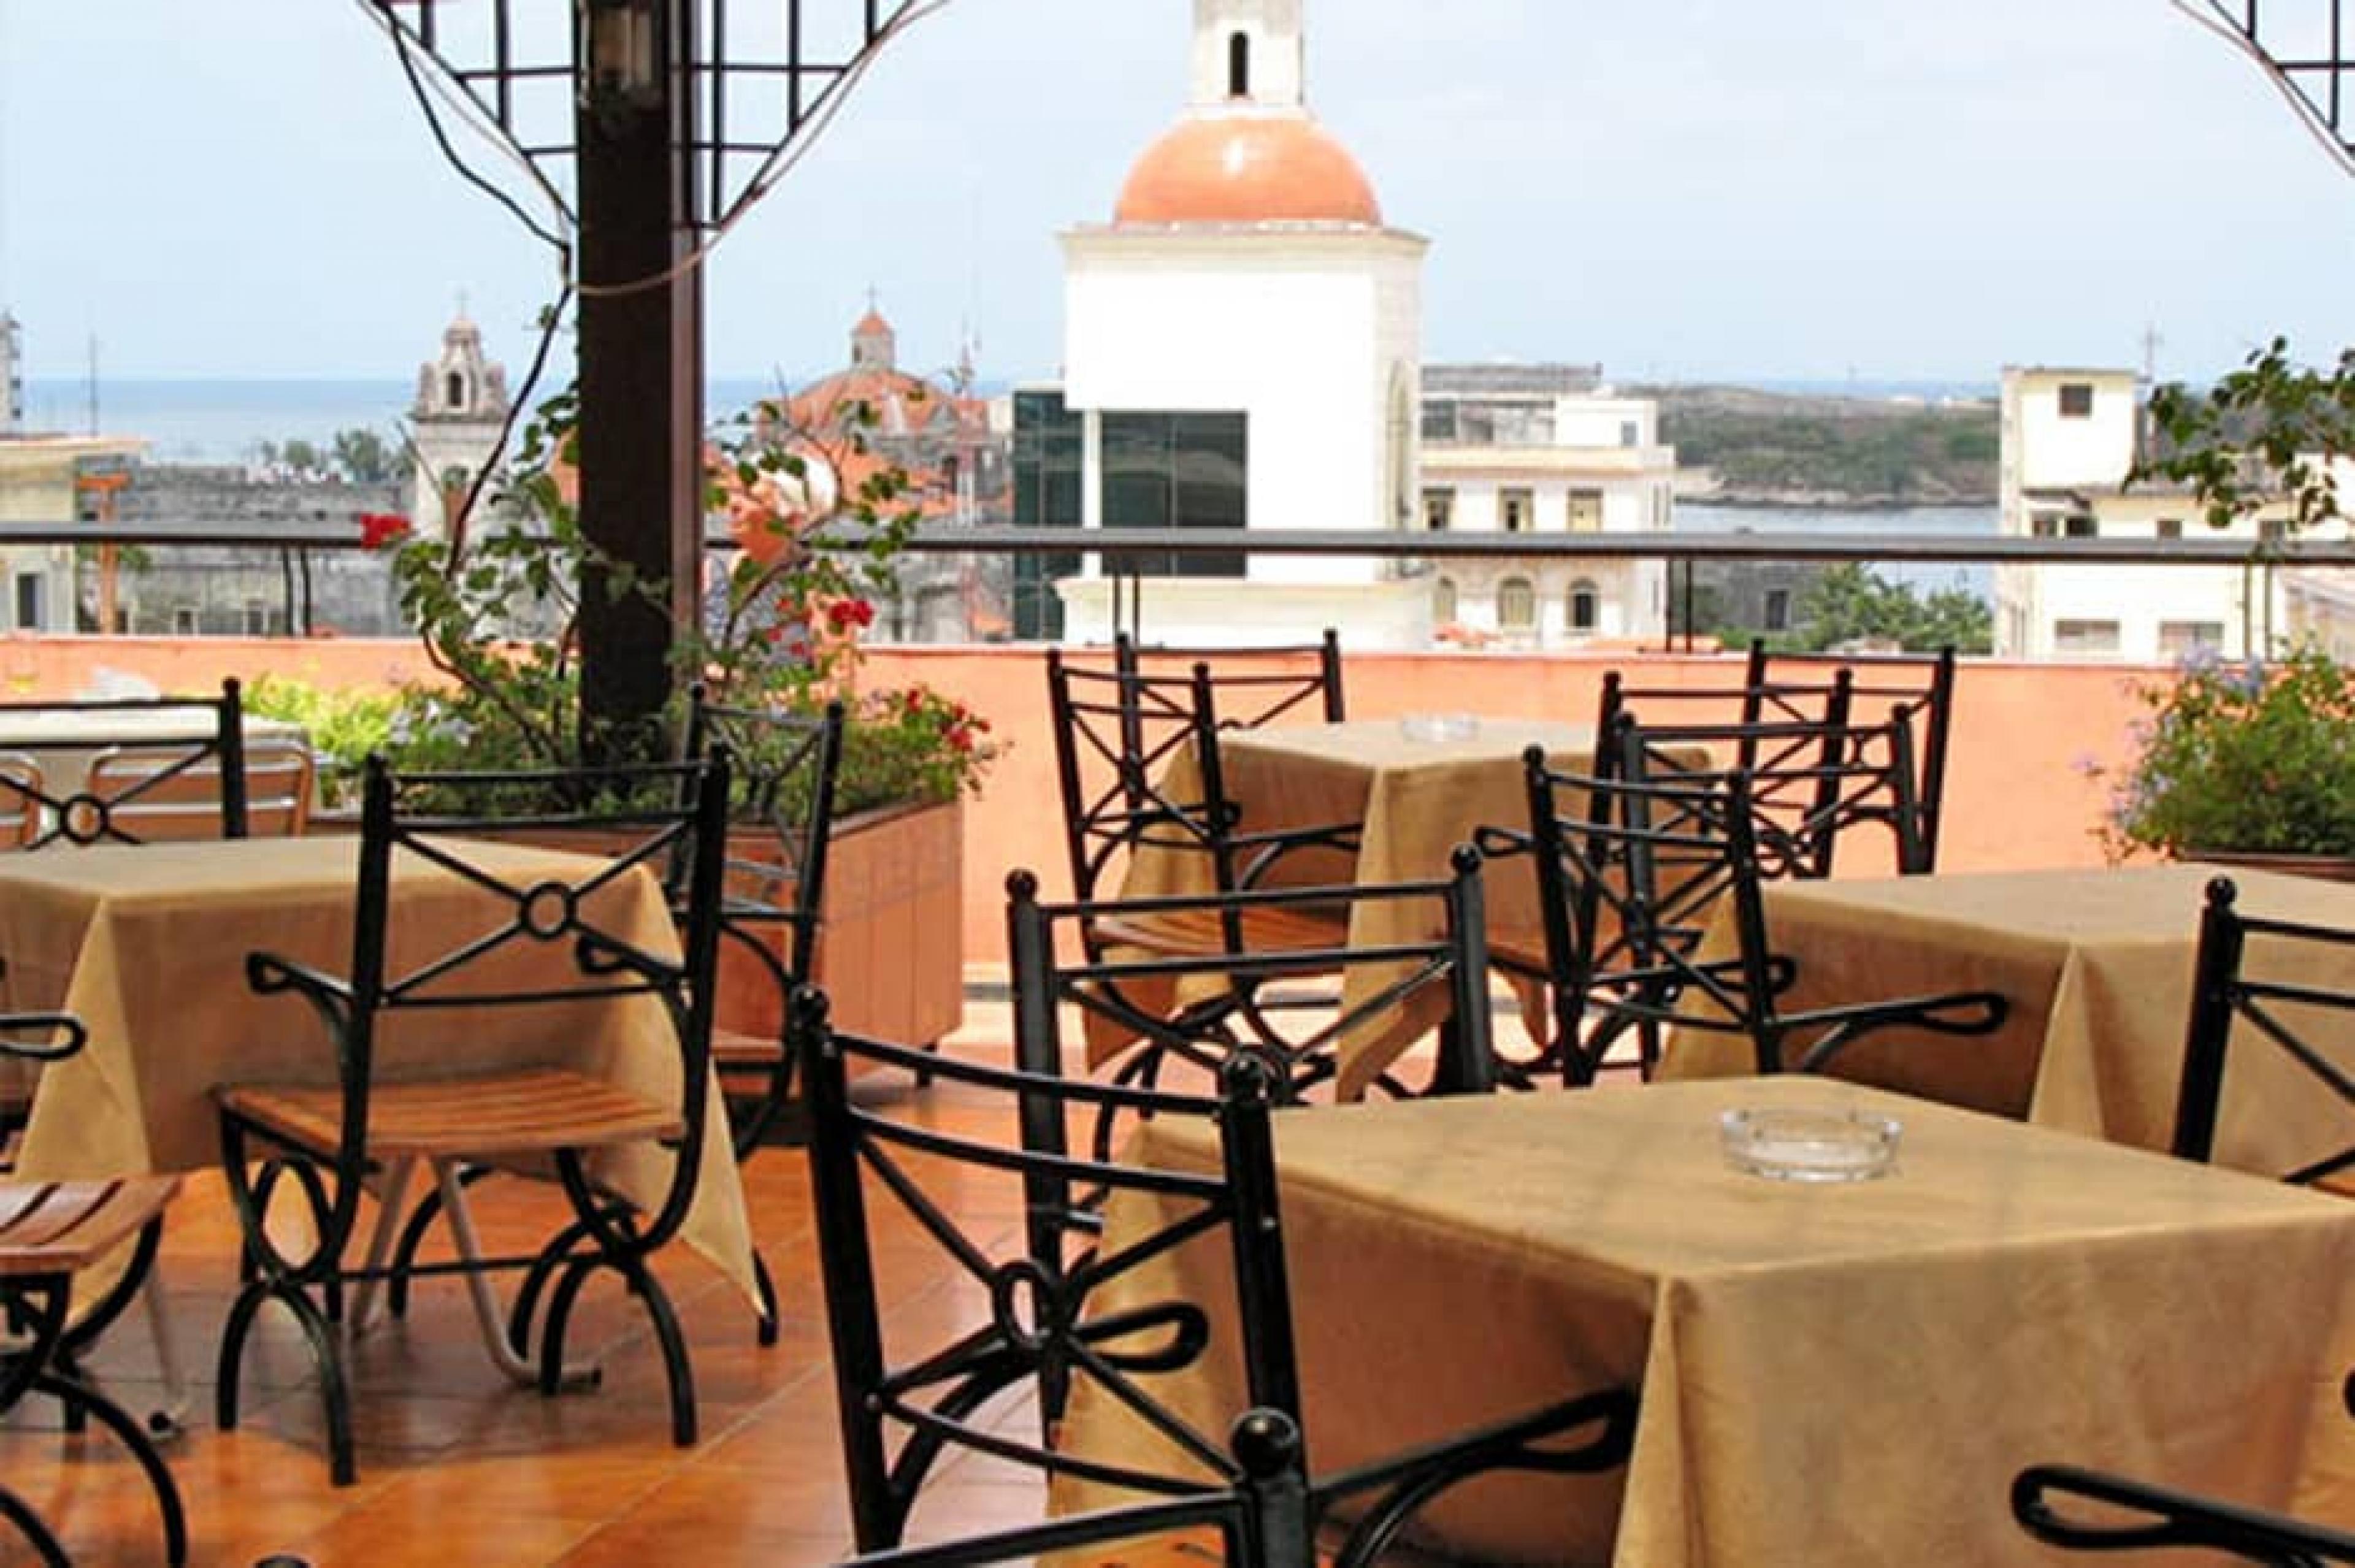 Dinning Area at Hotel Ambos Mundos, Havana, Caribbean